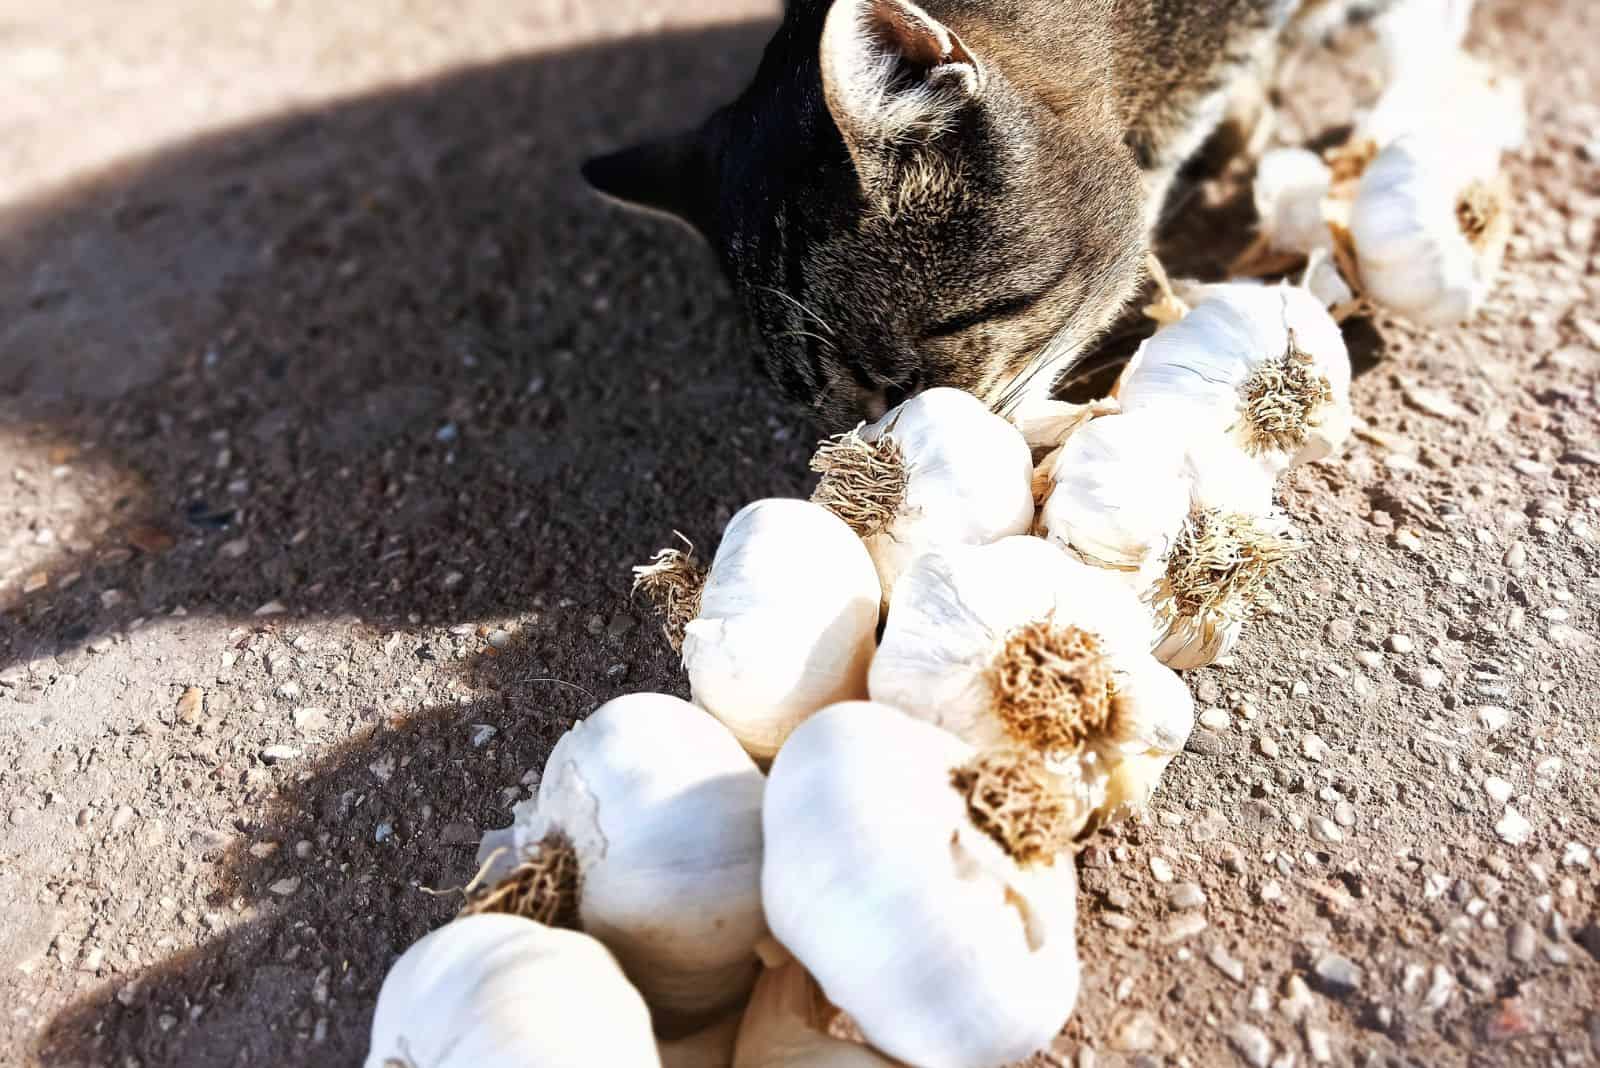 the cat sniffs the garlic